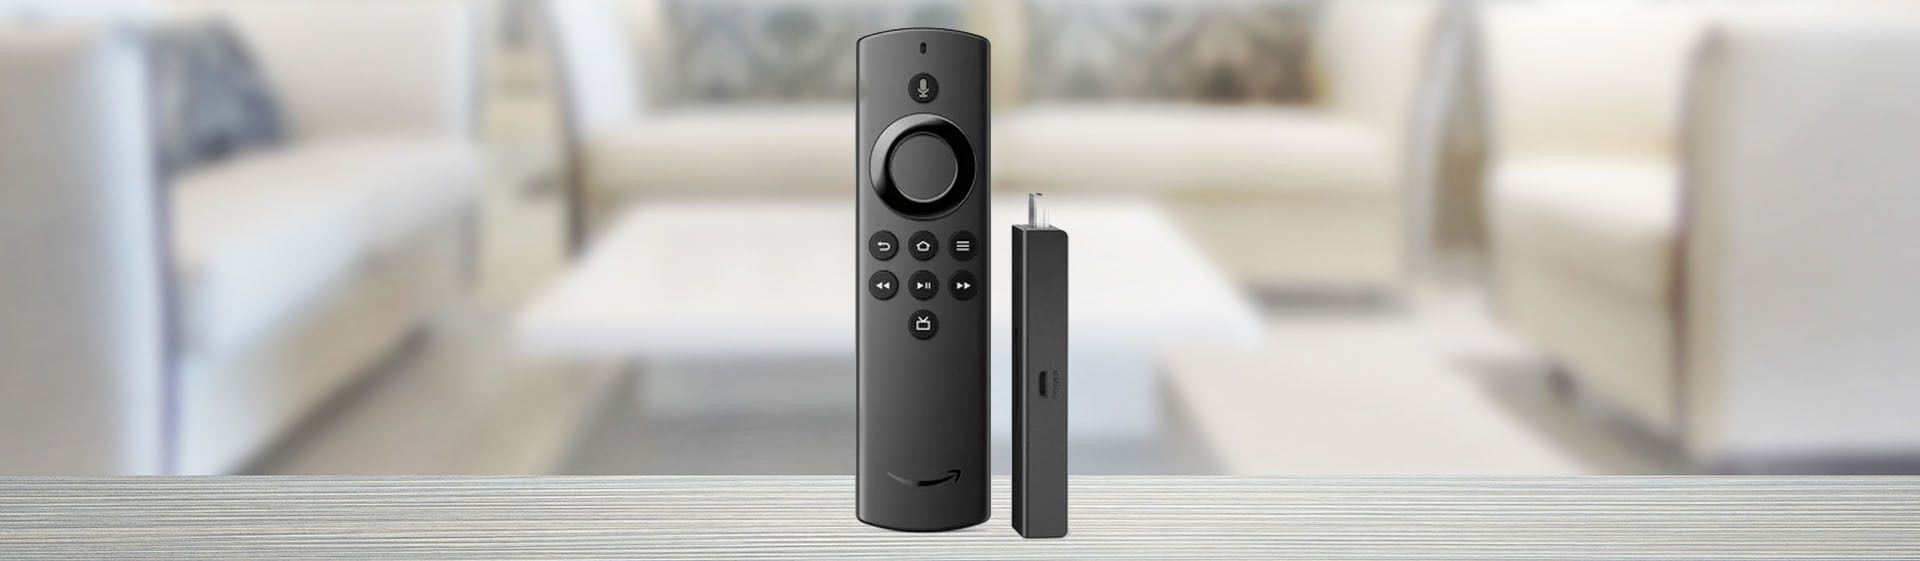 Fire TV Stick Lite vale a pena? Conheça a nova TV box da Amazon